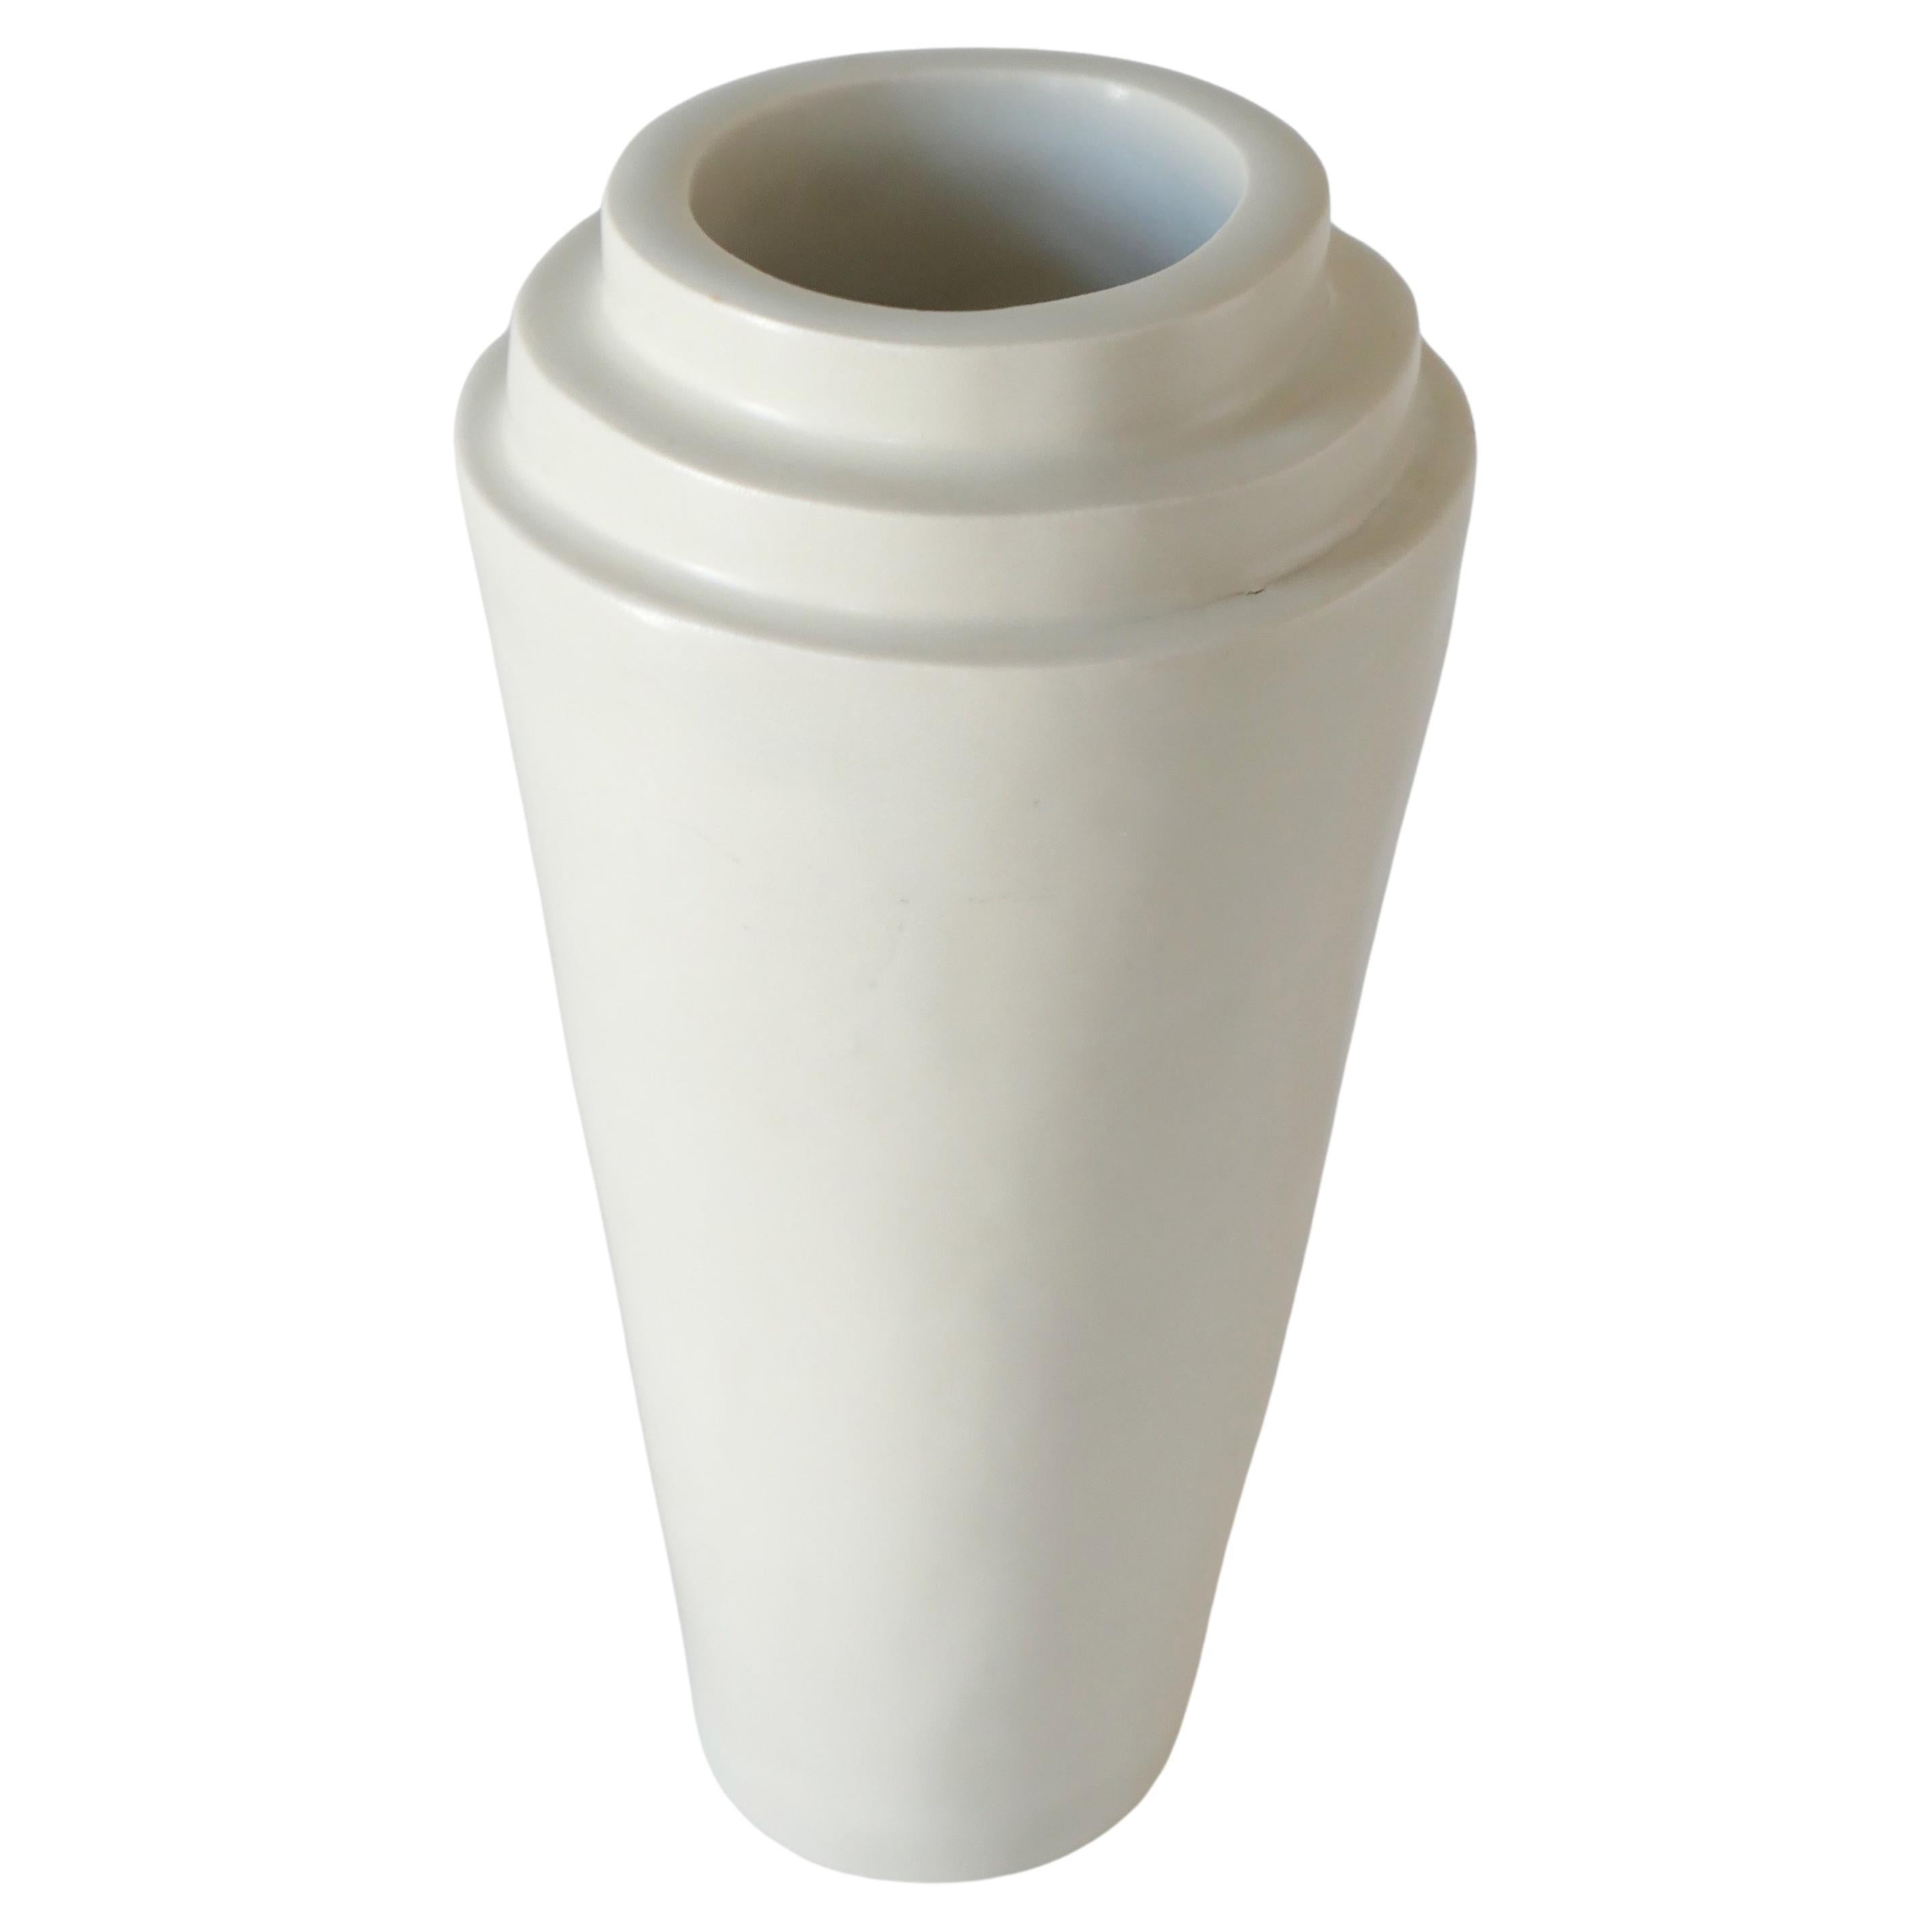 Contemporary Art Deco-Inspired Handmade Ceramic Vase For Sale